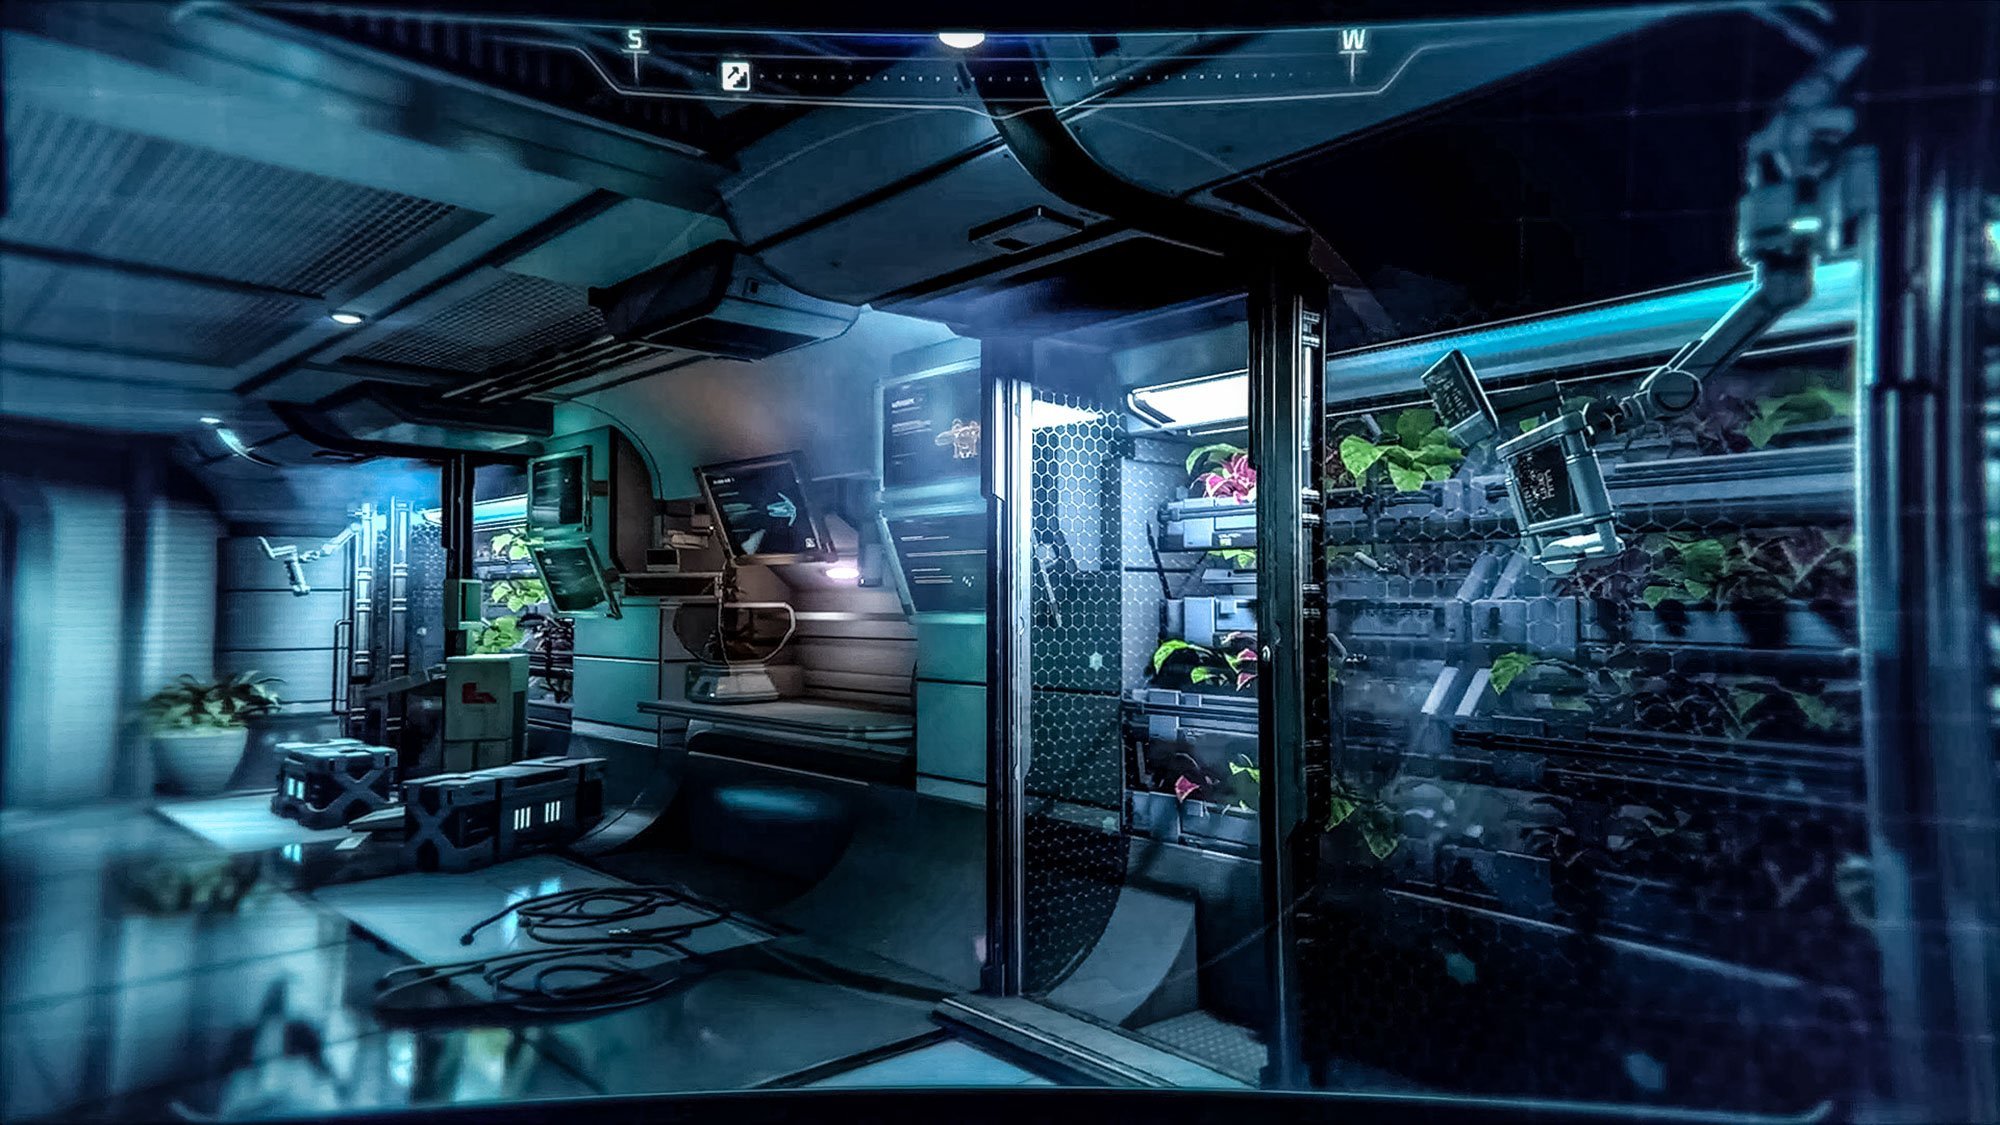 Sci fi gaming. Sci Fi Art био лаборатория. Mass Effect интерьер корабля. Mass Effect Андромеда интерьер корабля. Лаборатория на космическом корабле.